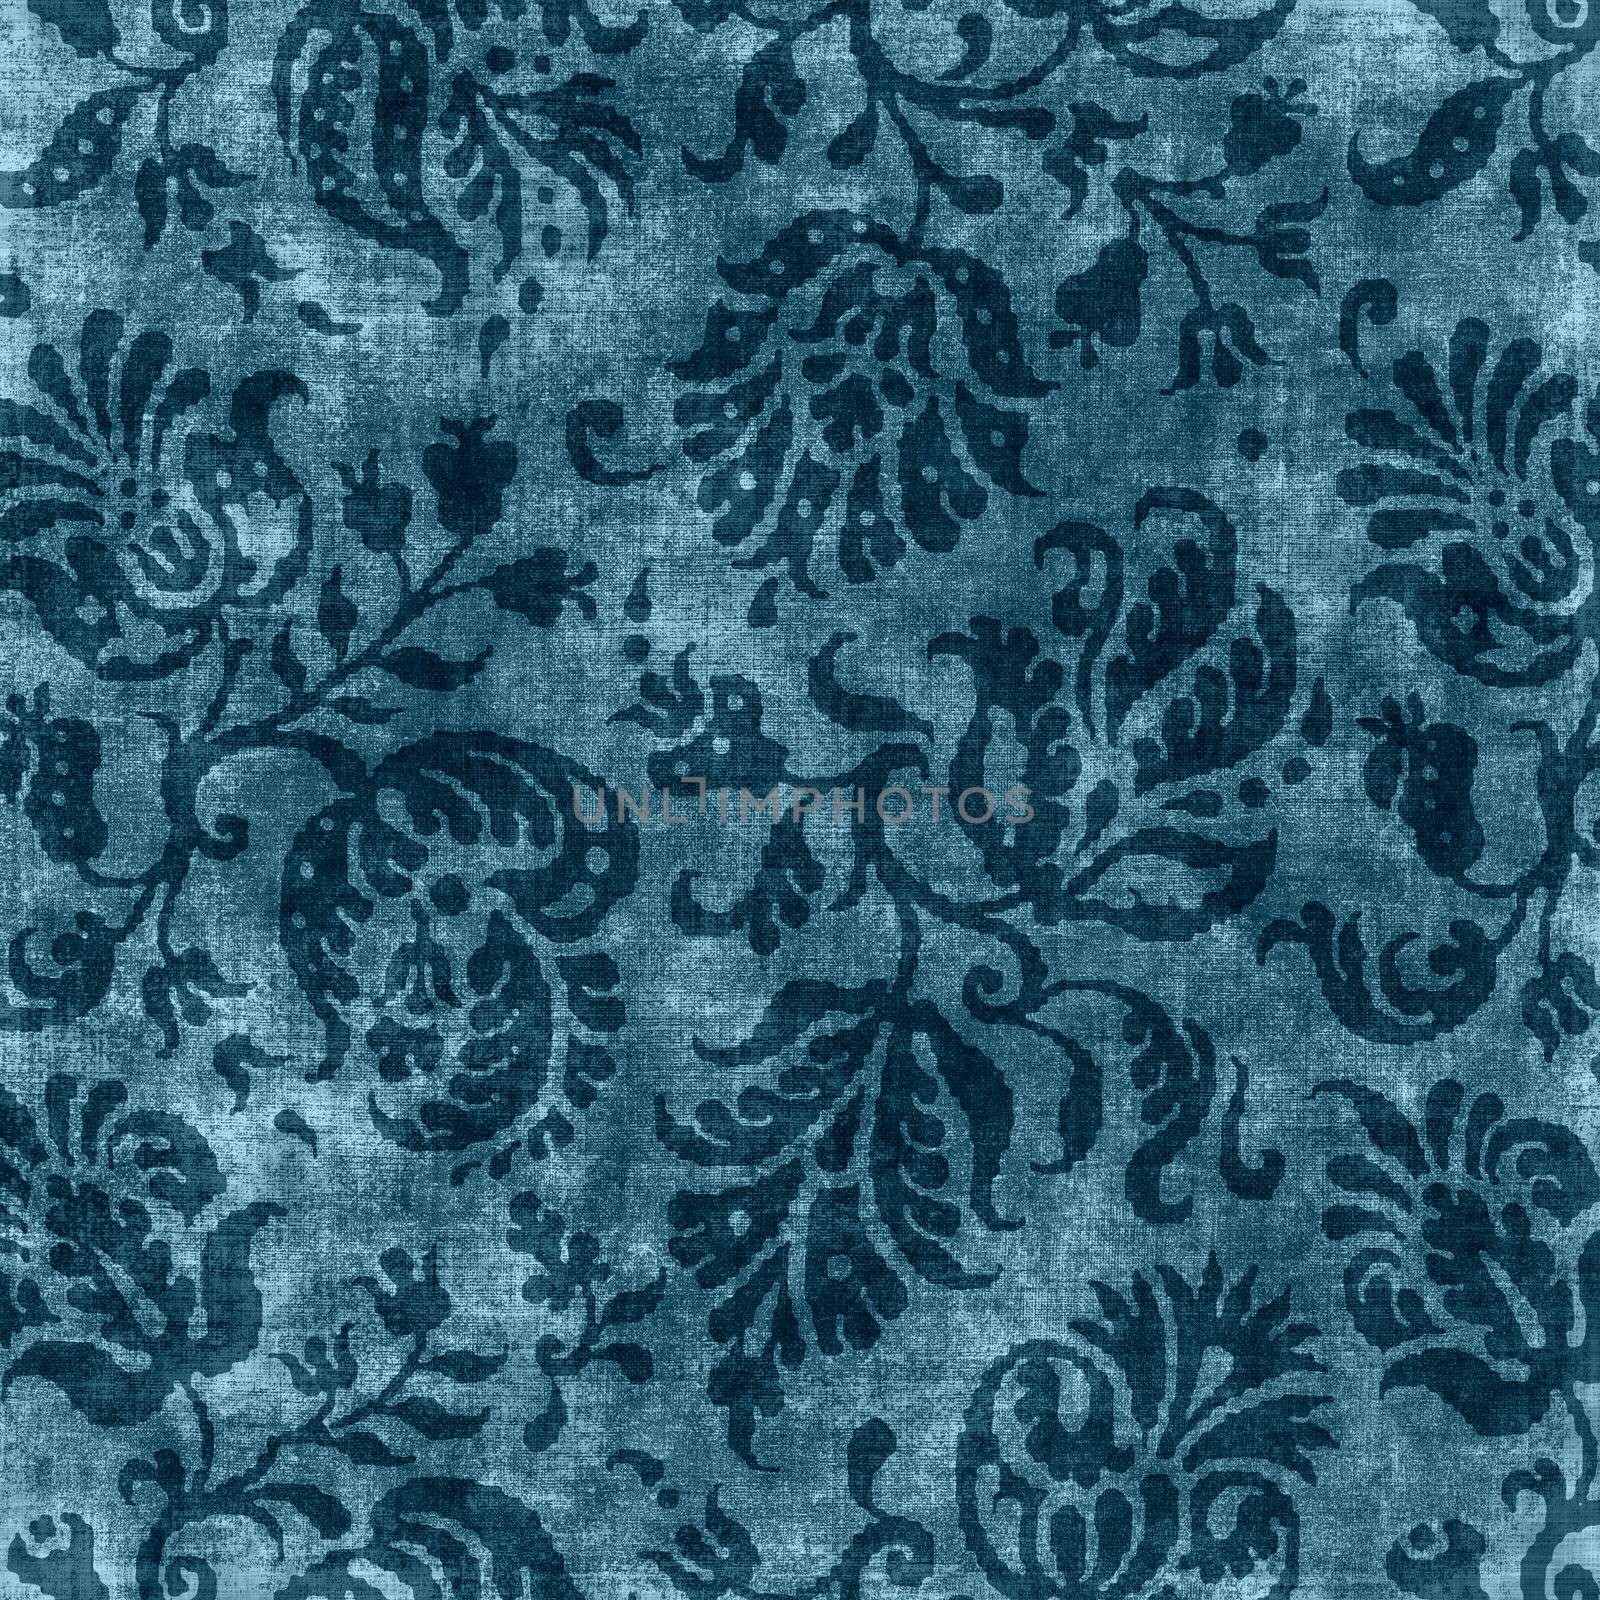 Worn deep blue floral tapestry pattern